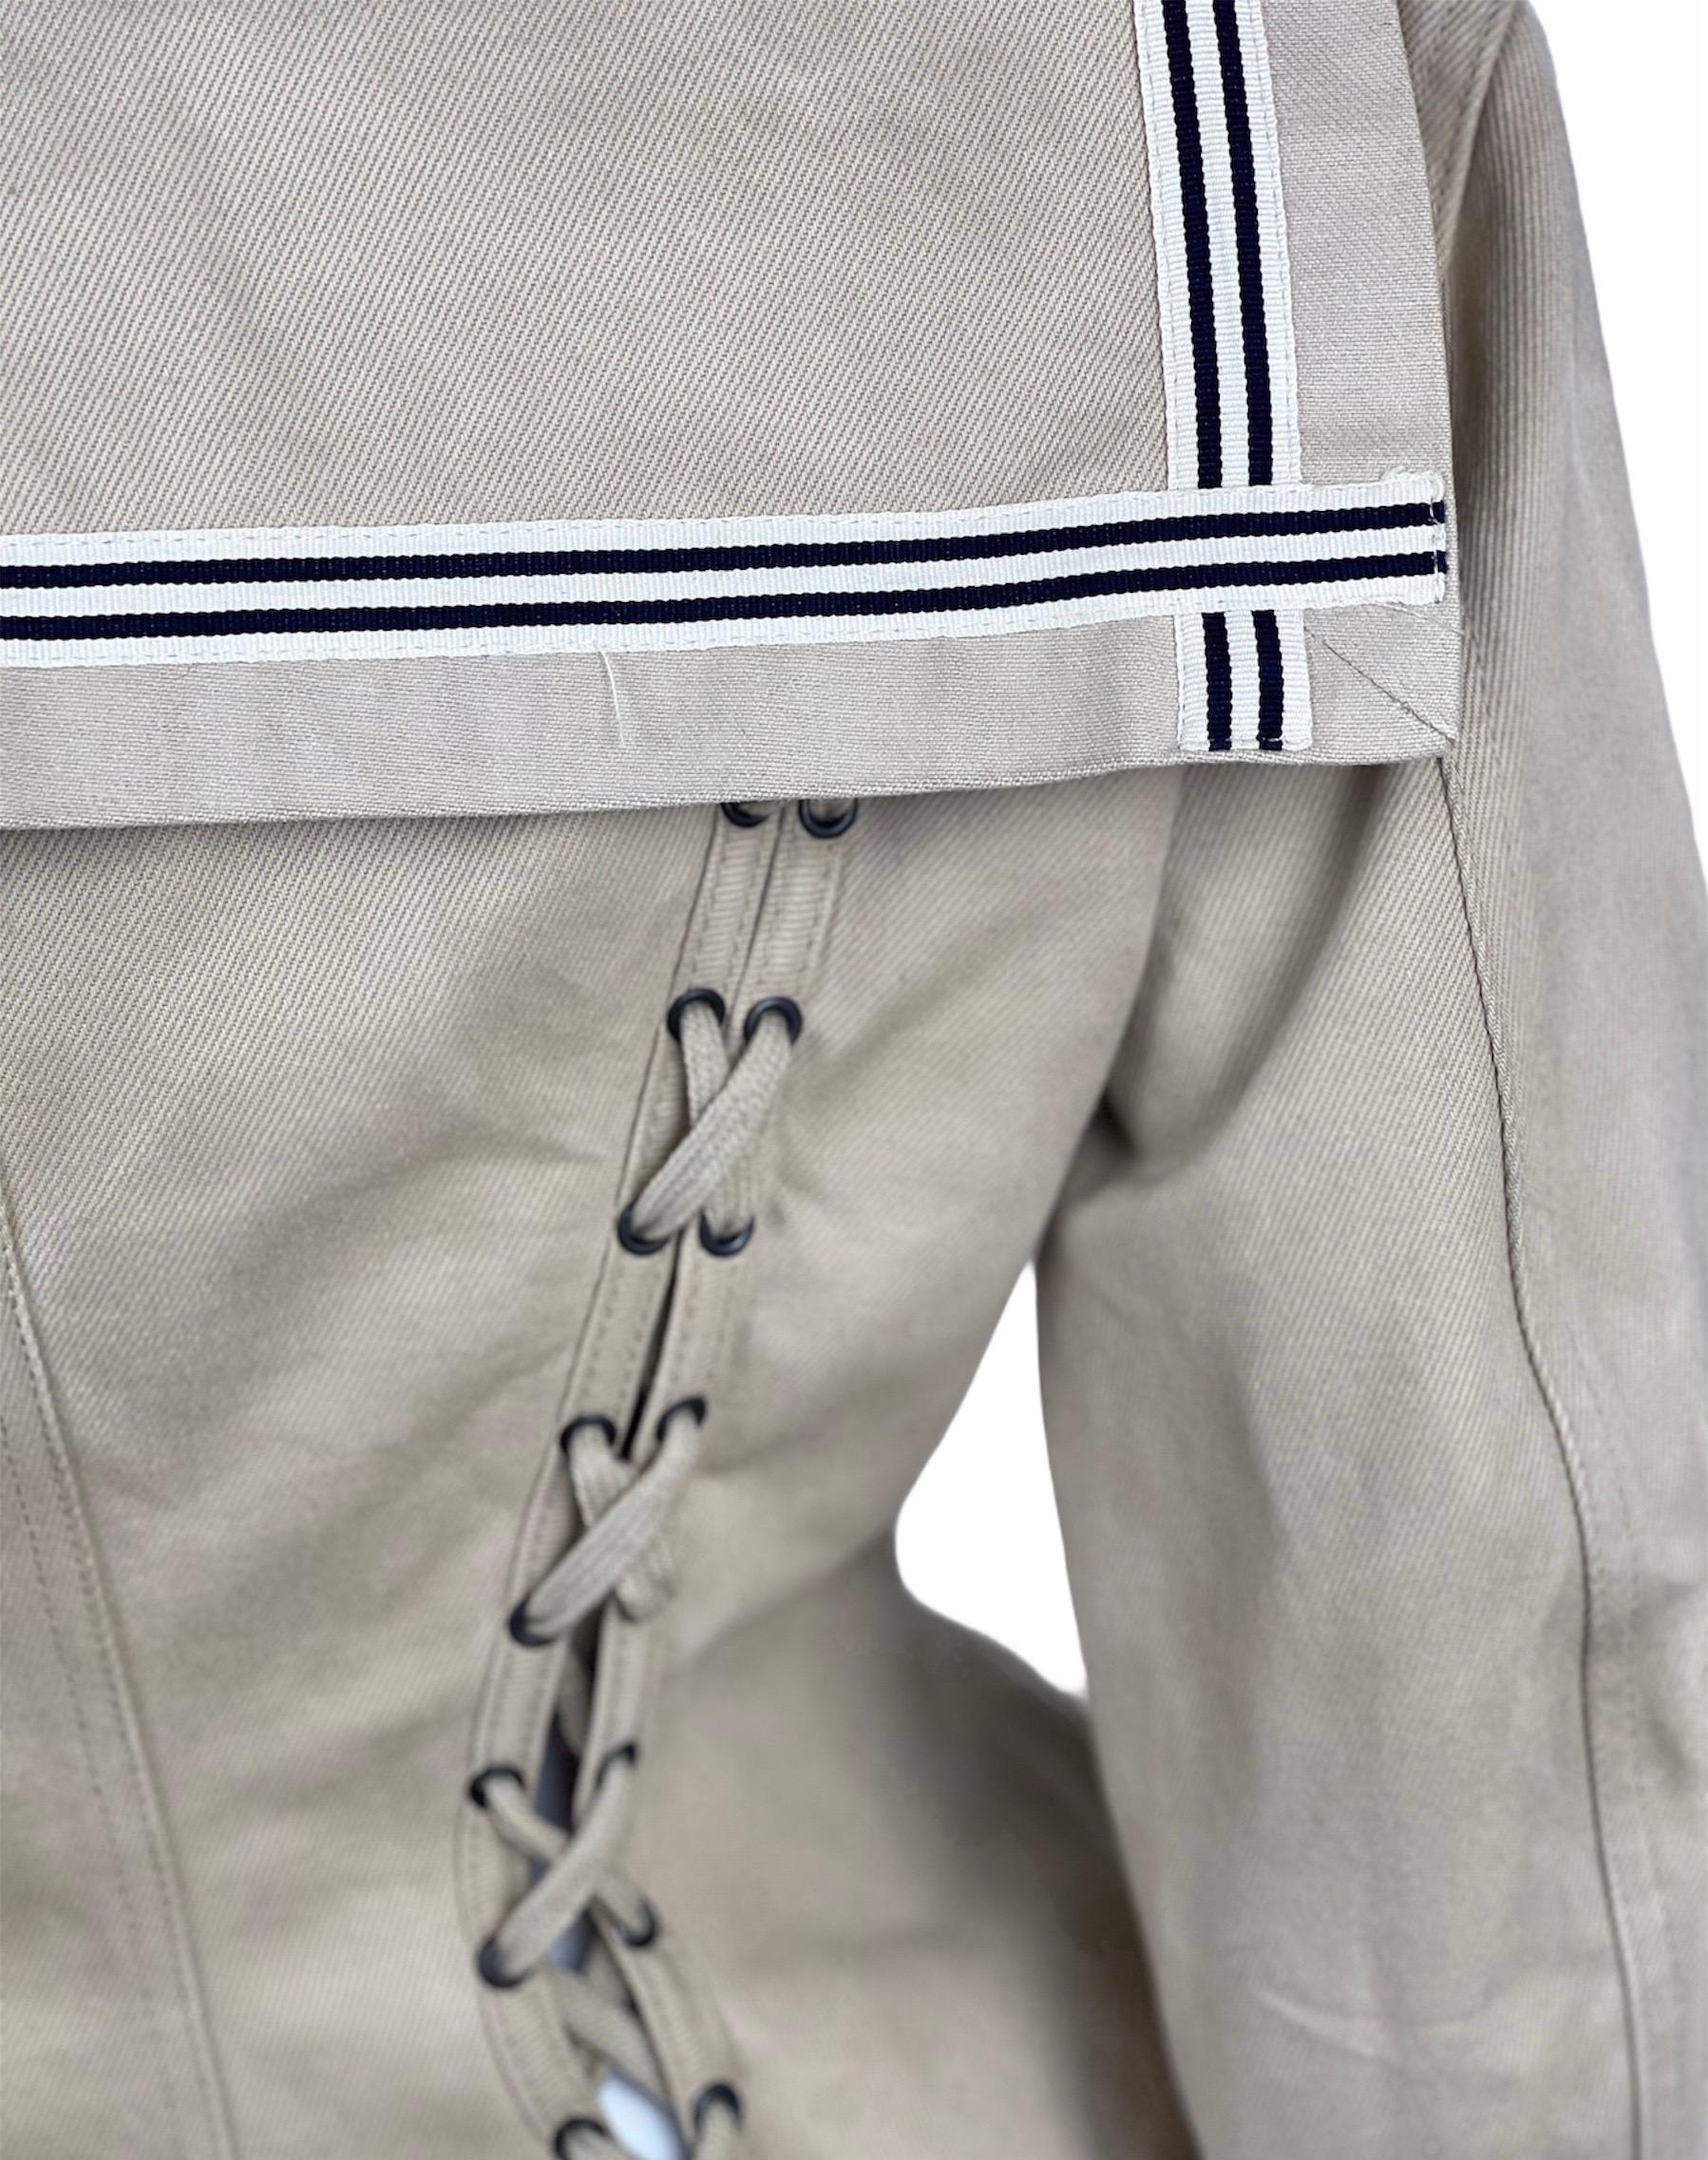 SS89 Junior Gaultier Sailor Jacket Lacing Medium Size 6